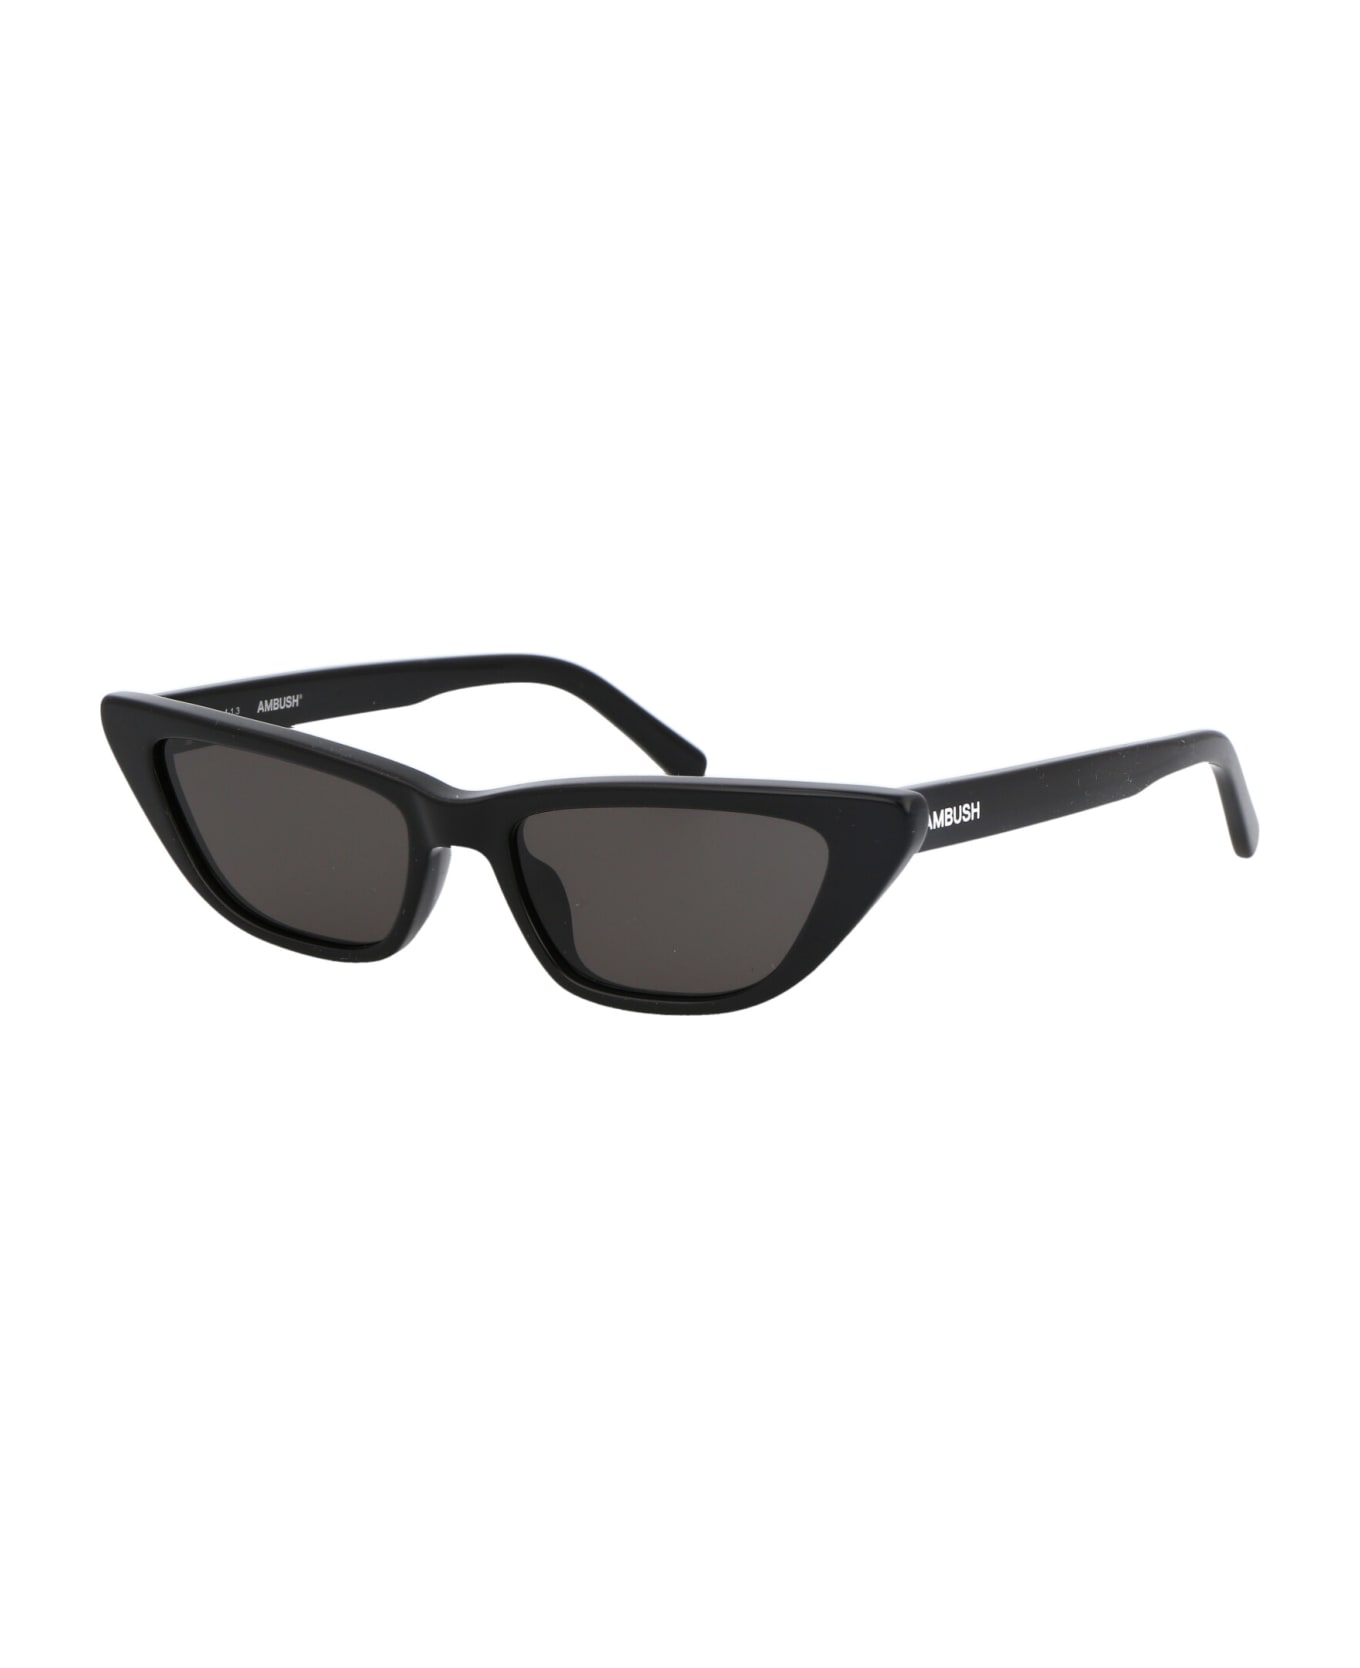 AMBUSH Molly Sunglasses - 1007 BLACK DARK GREY サングラス